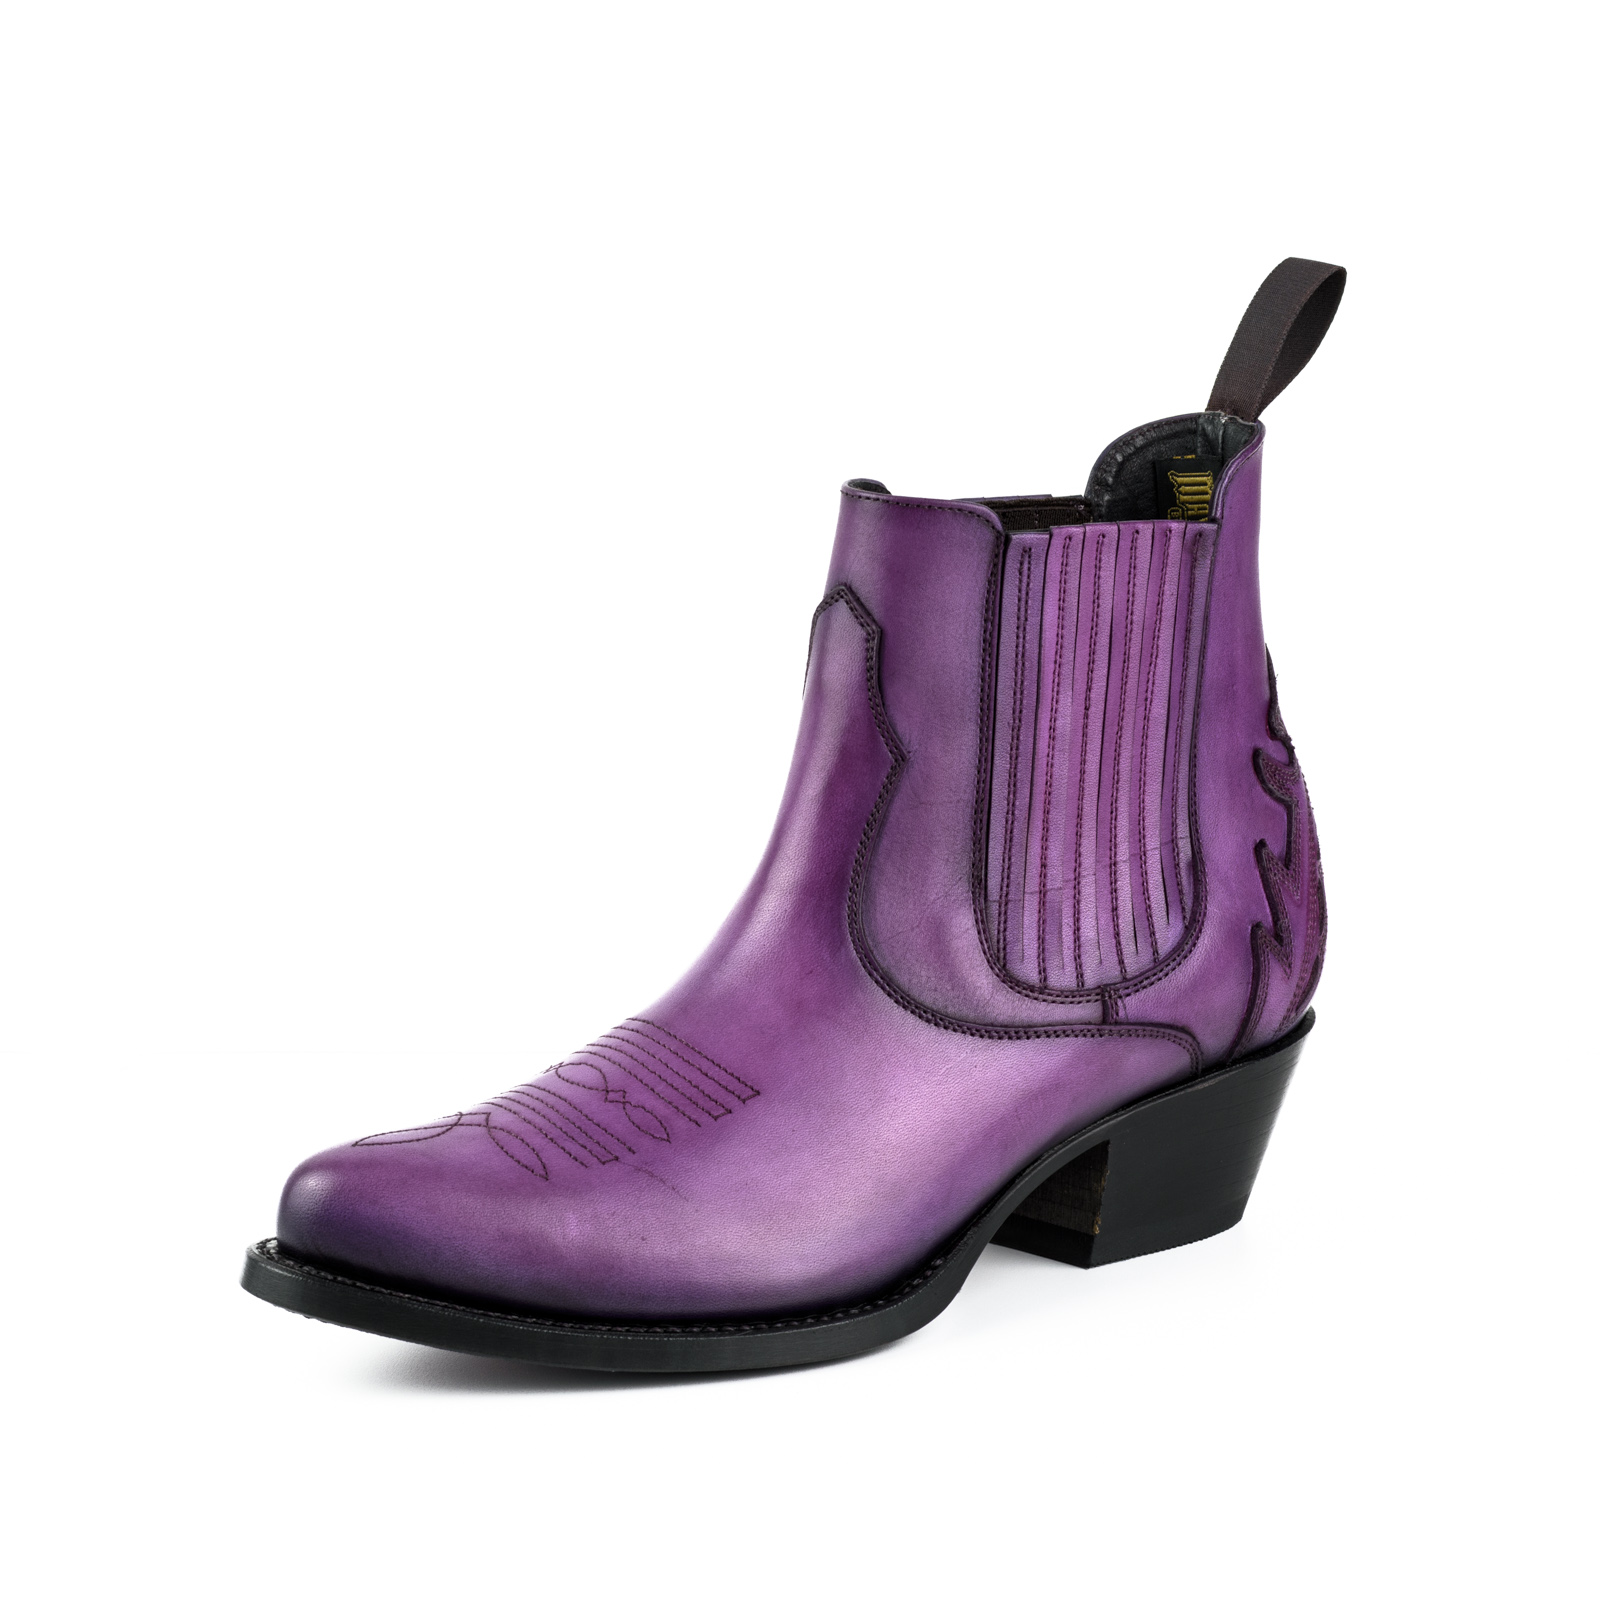 mayura-boots-modelo-marilyn-2487-morado-1